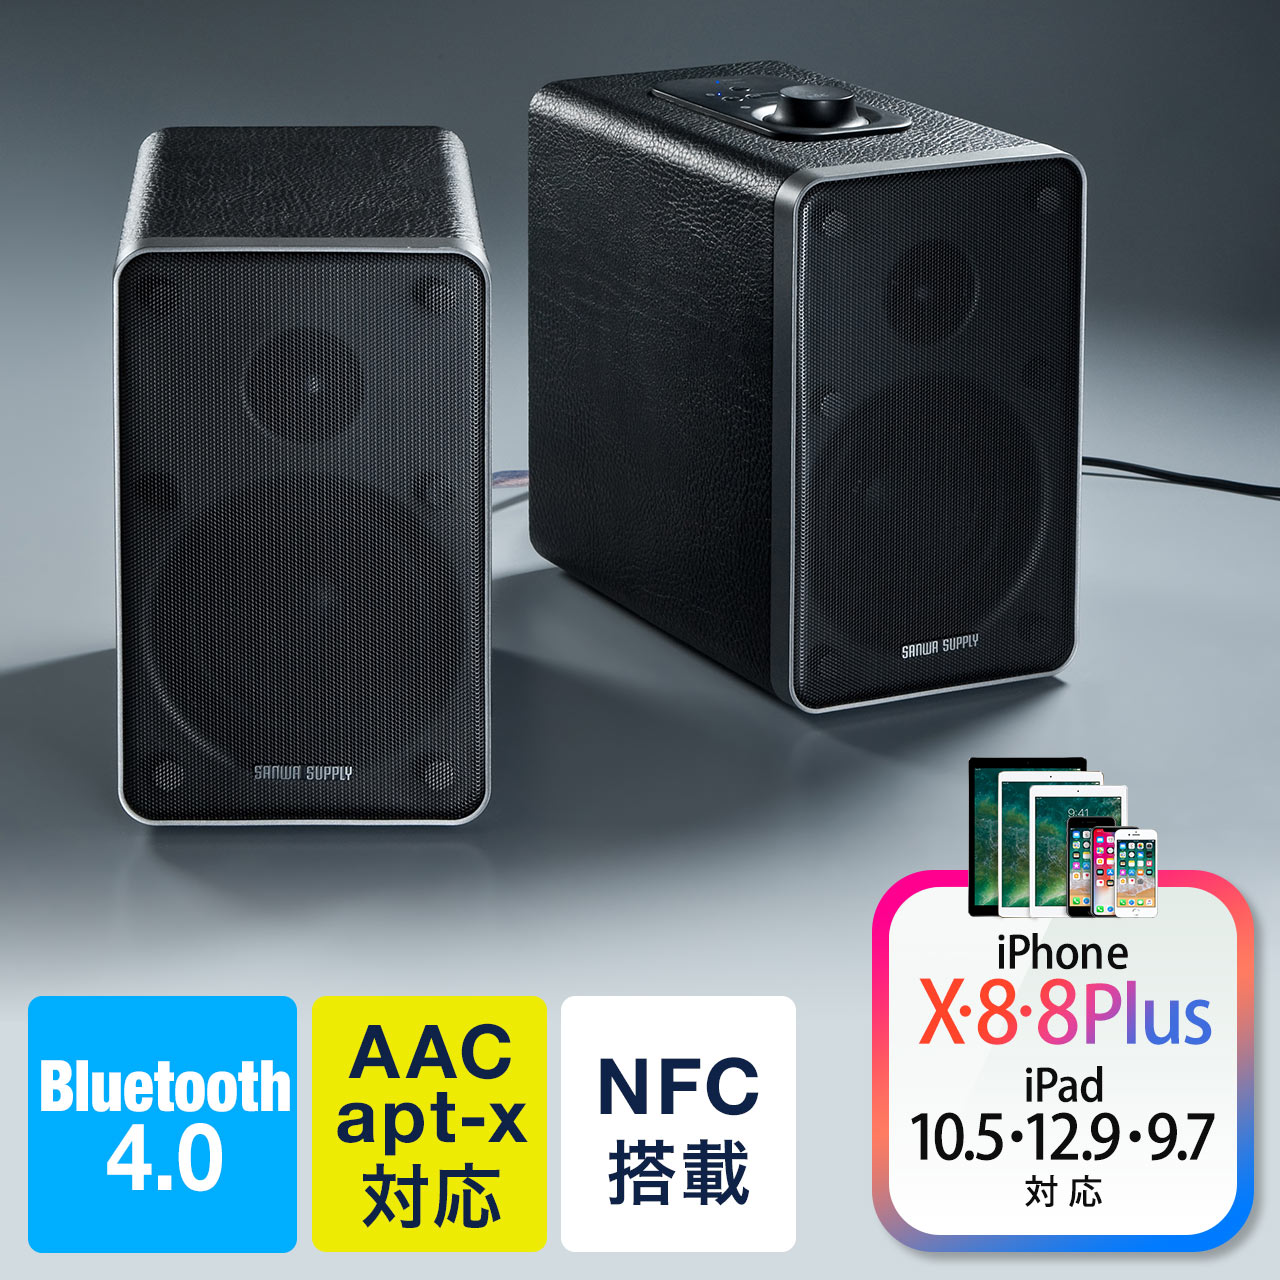 Bluetoothスピーカー 高音質 重低音 木製 レザー調本体 2ch Aac Apt X 400 Sp071bk 通販 サンワダイレクト